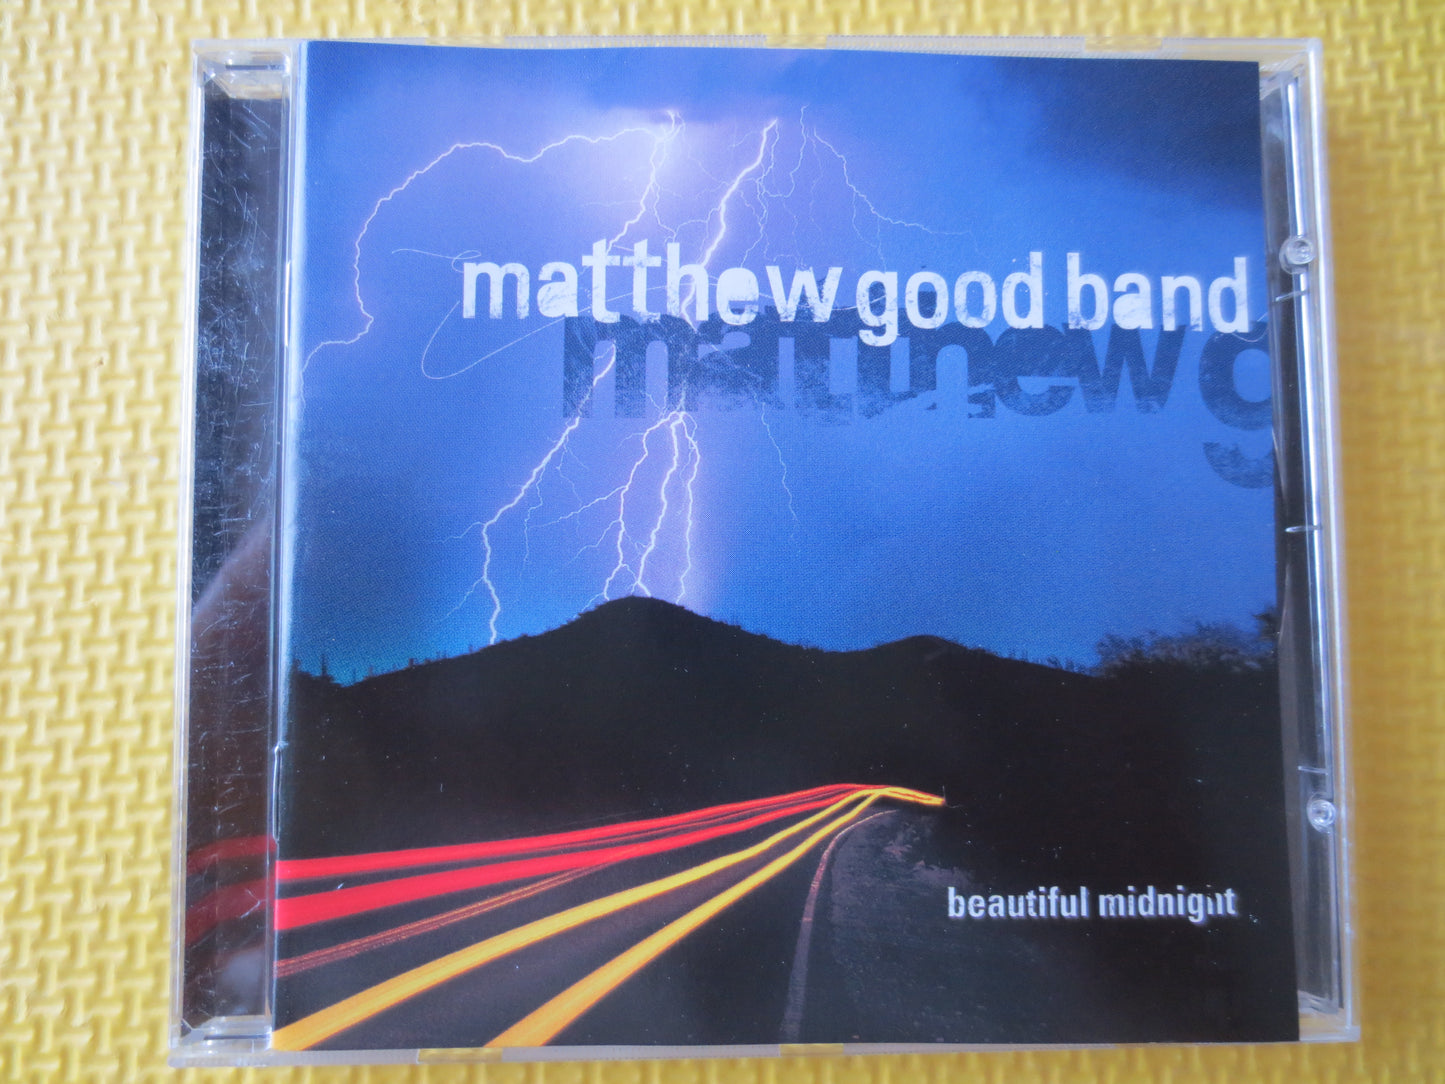 MATTHEW GOOD Band, BEAUTIFUL Midnight Cd, Matthew Good Band Lp, Vintage Compact Disc, Rock Cd, Rock Music Cd, 1999 Compact Disc